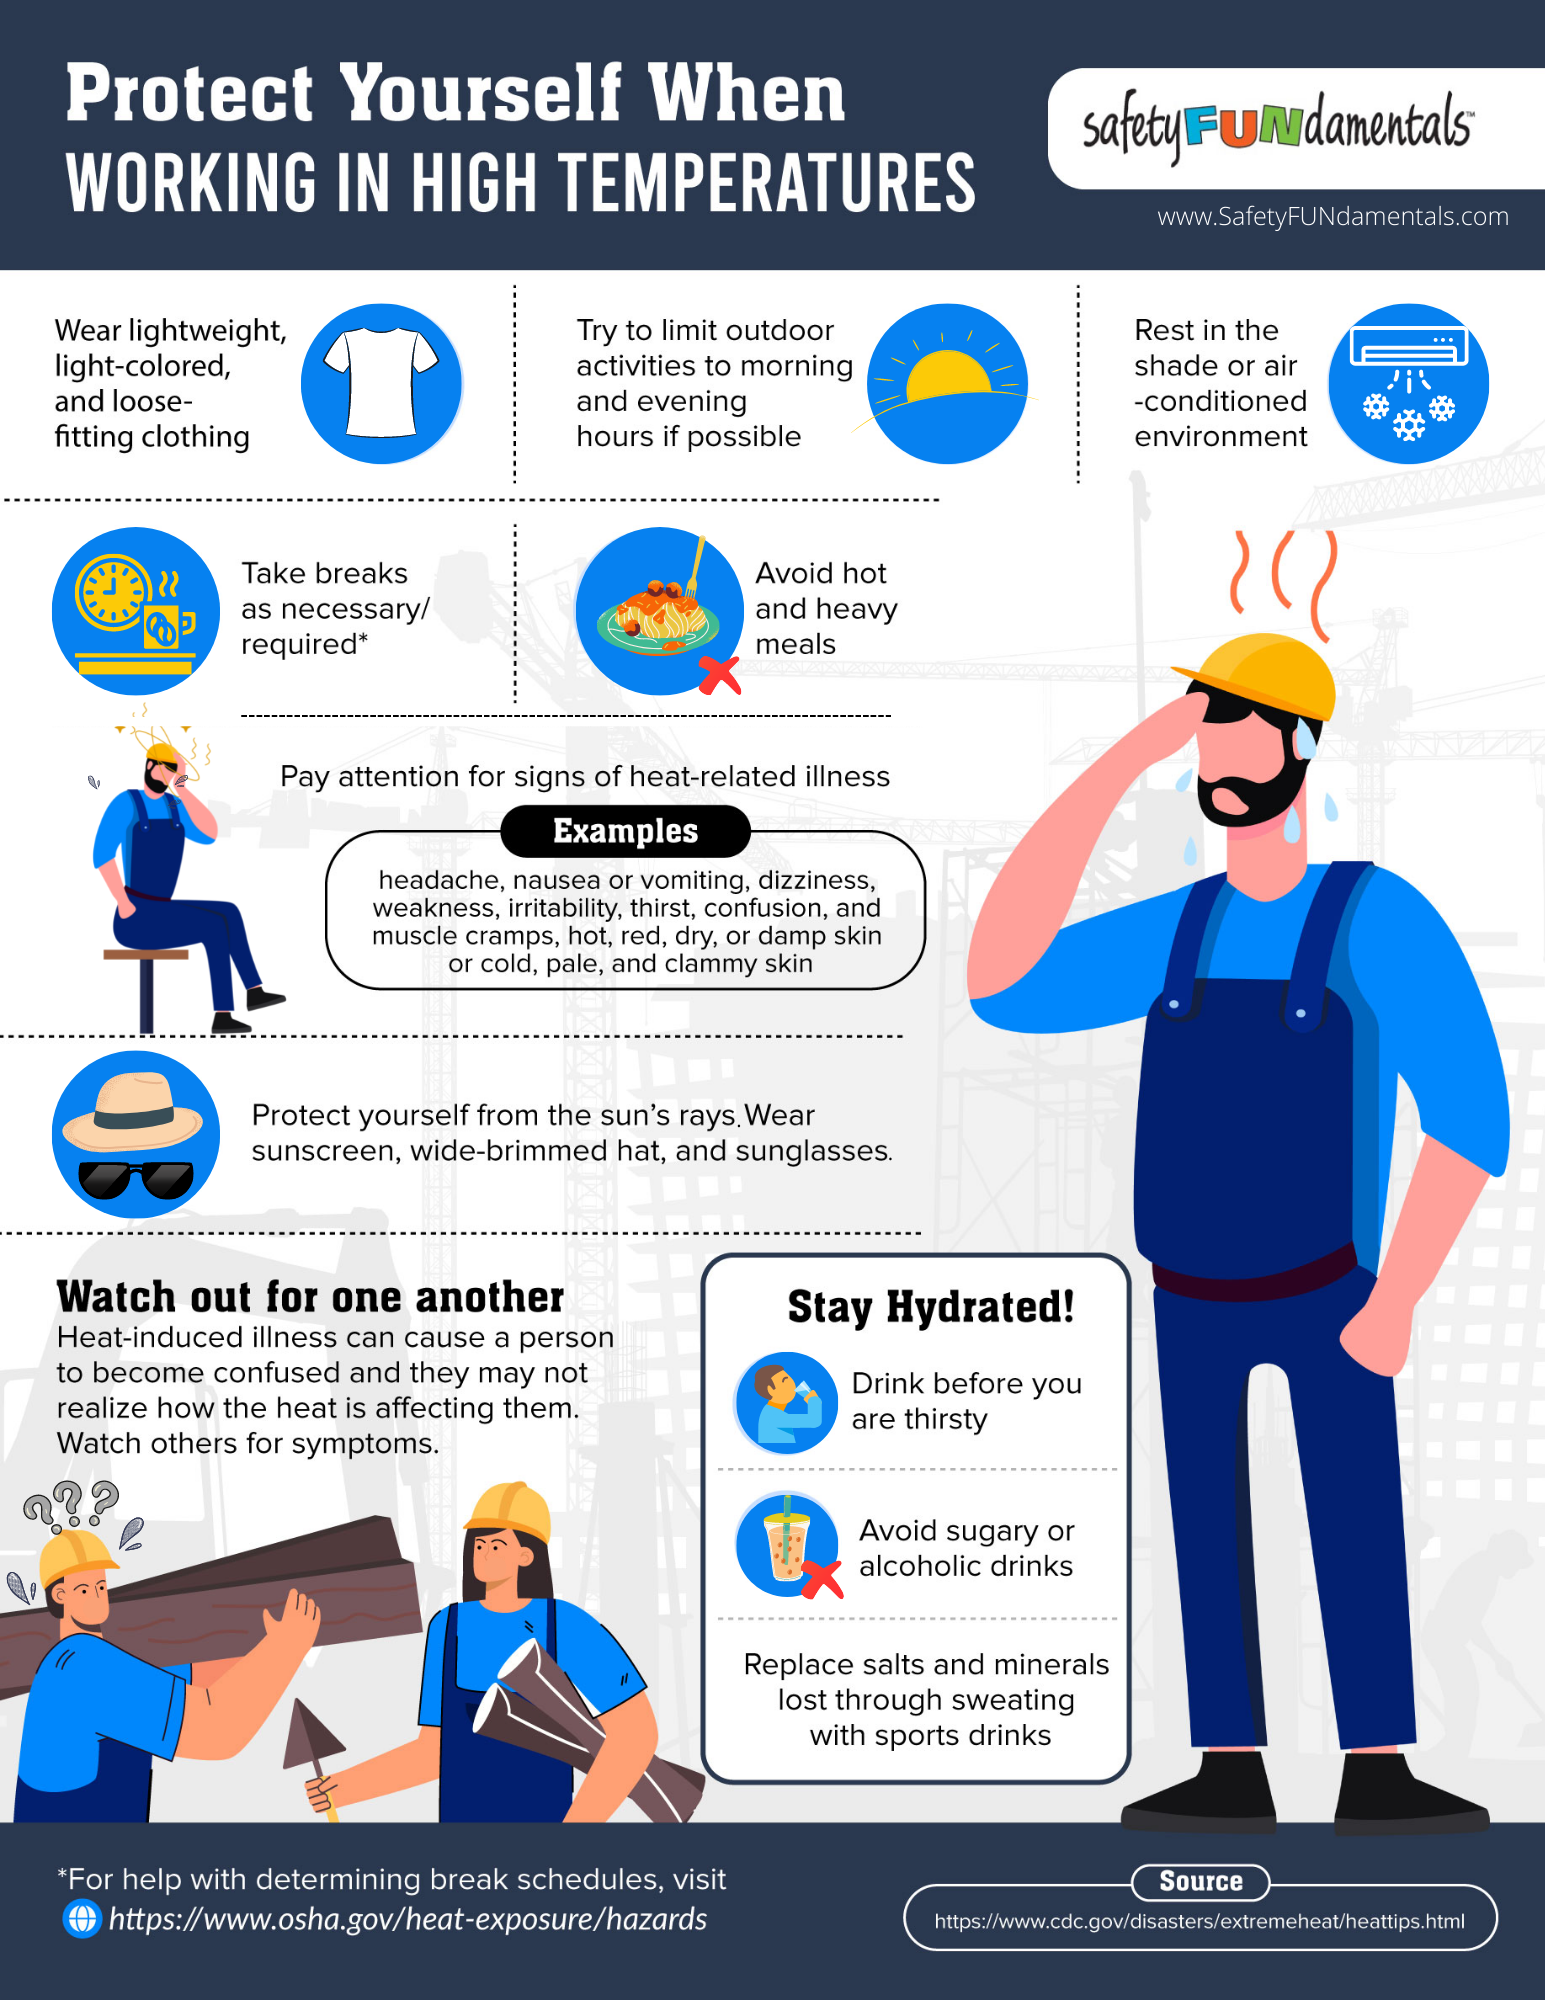 Heat Stress Infographic